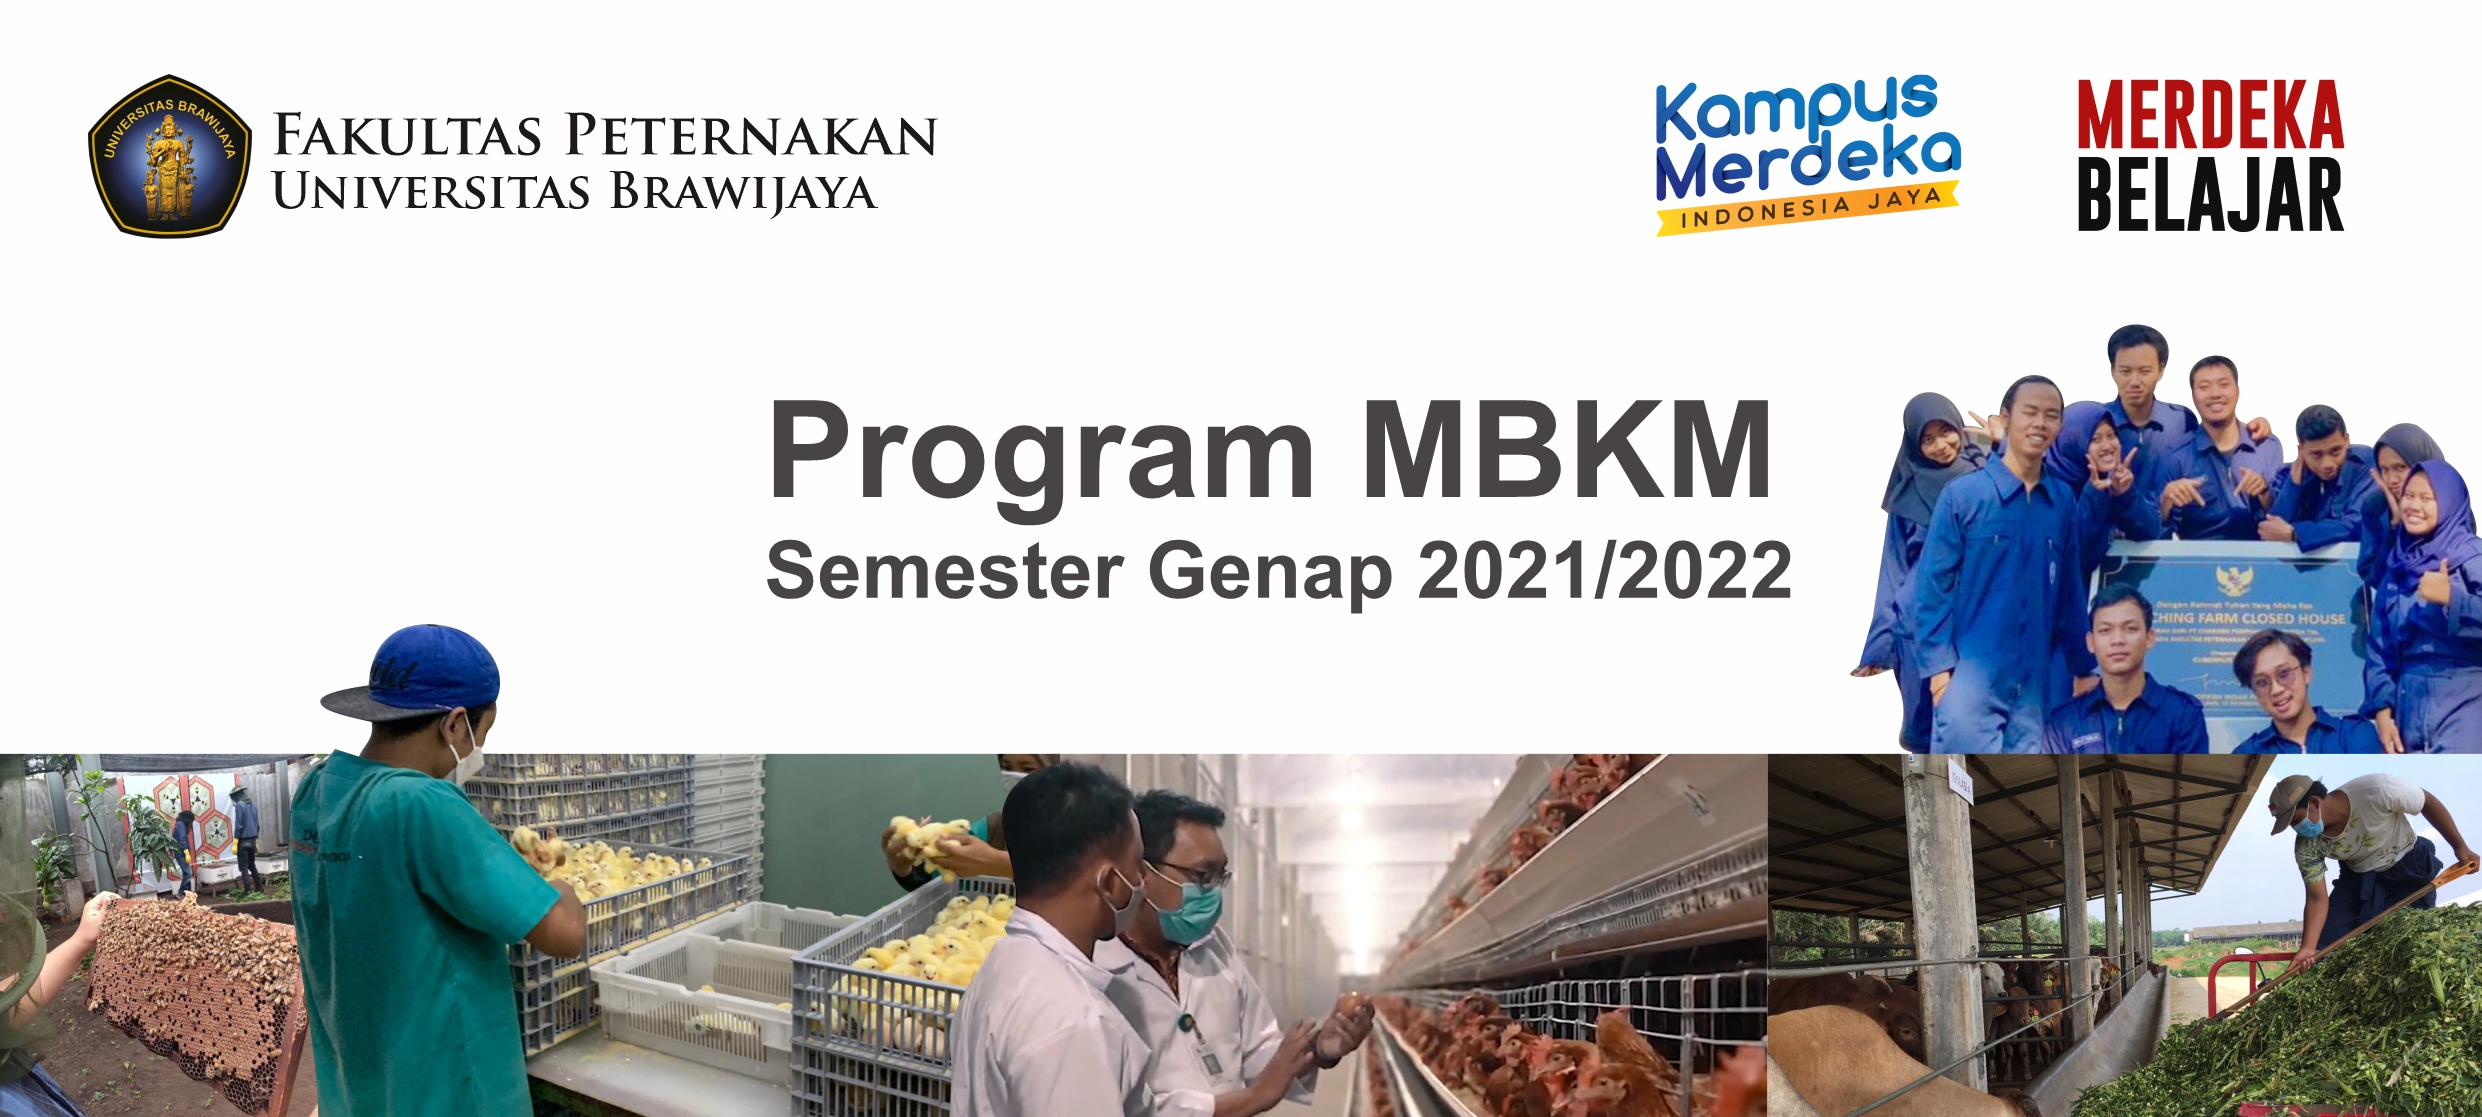 (Indonesia) Program MBKM Semester Genap 2021/2022